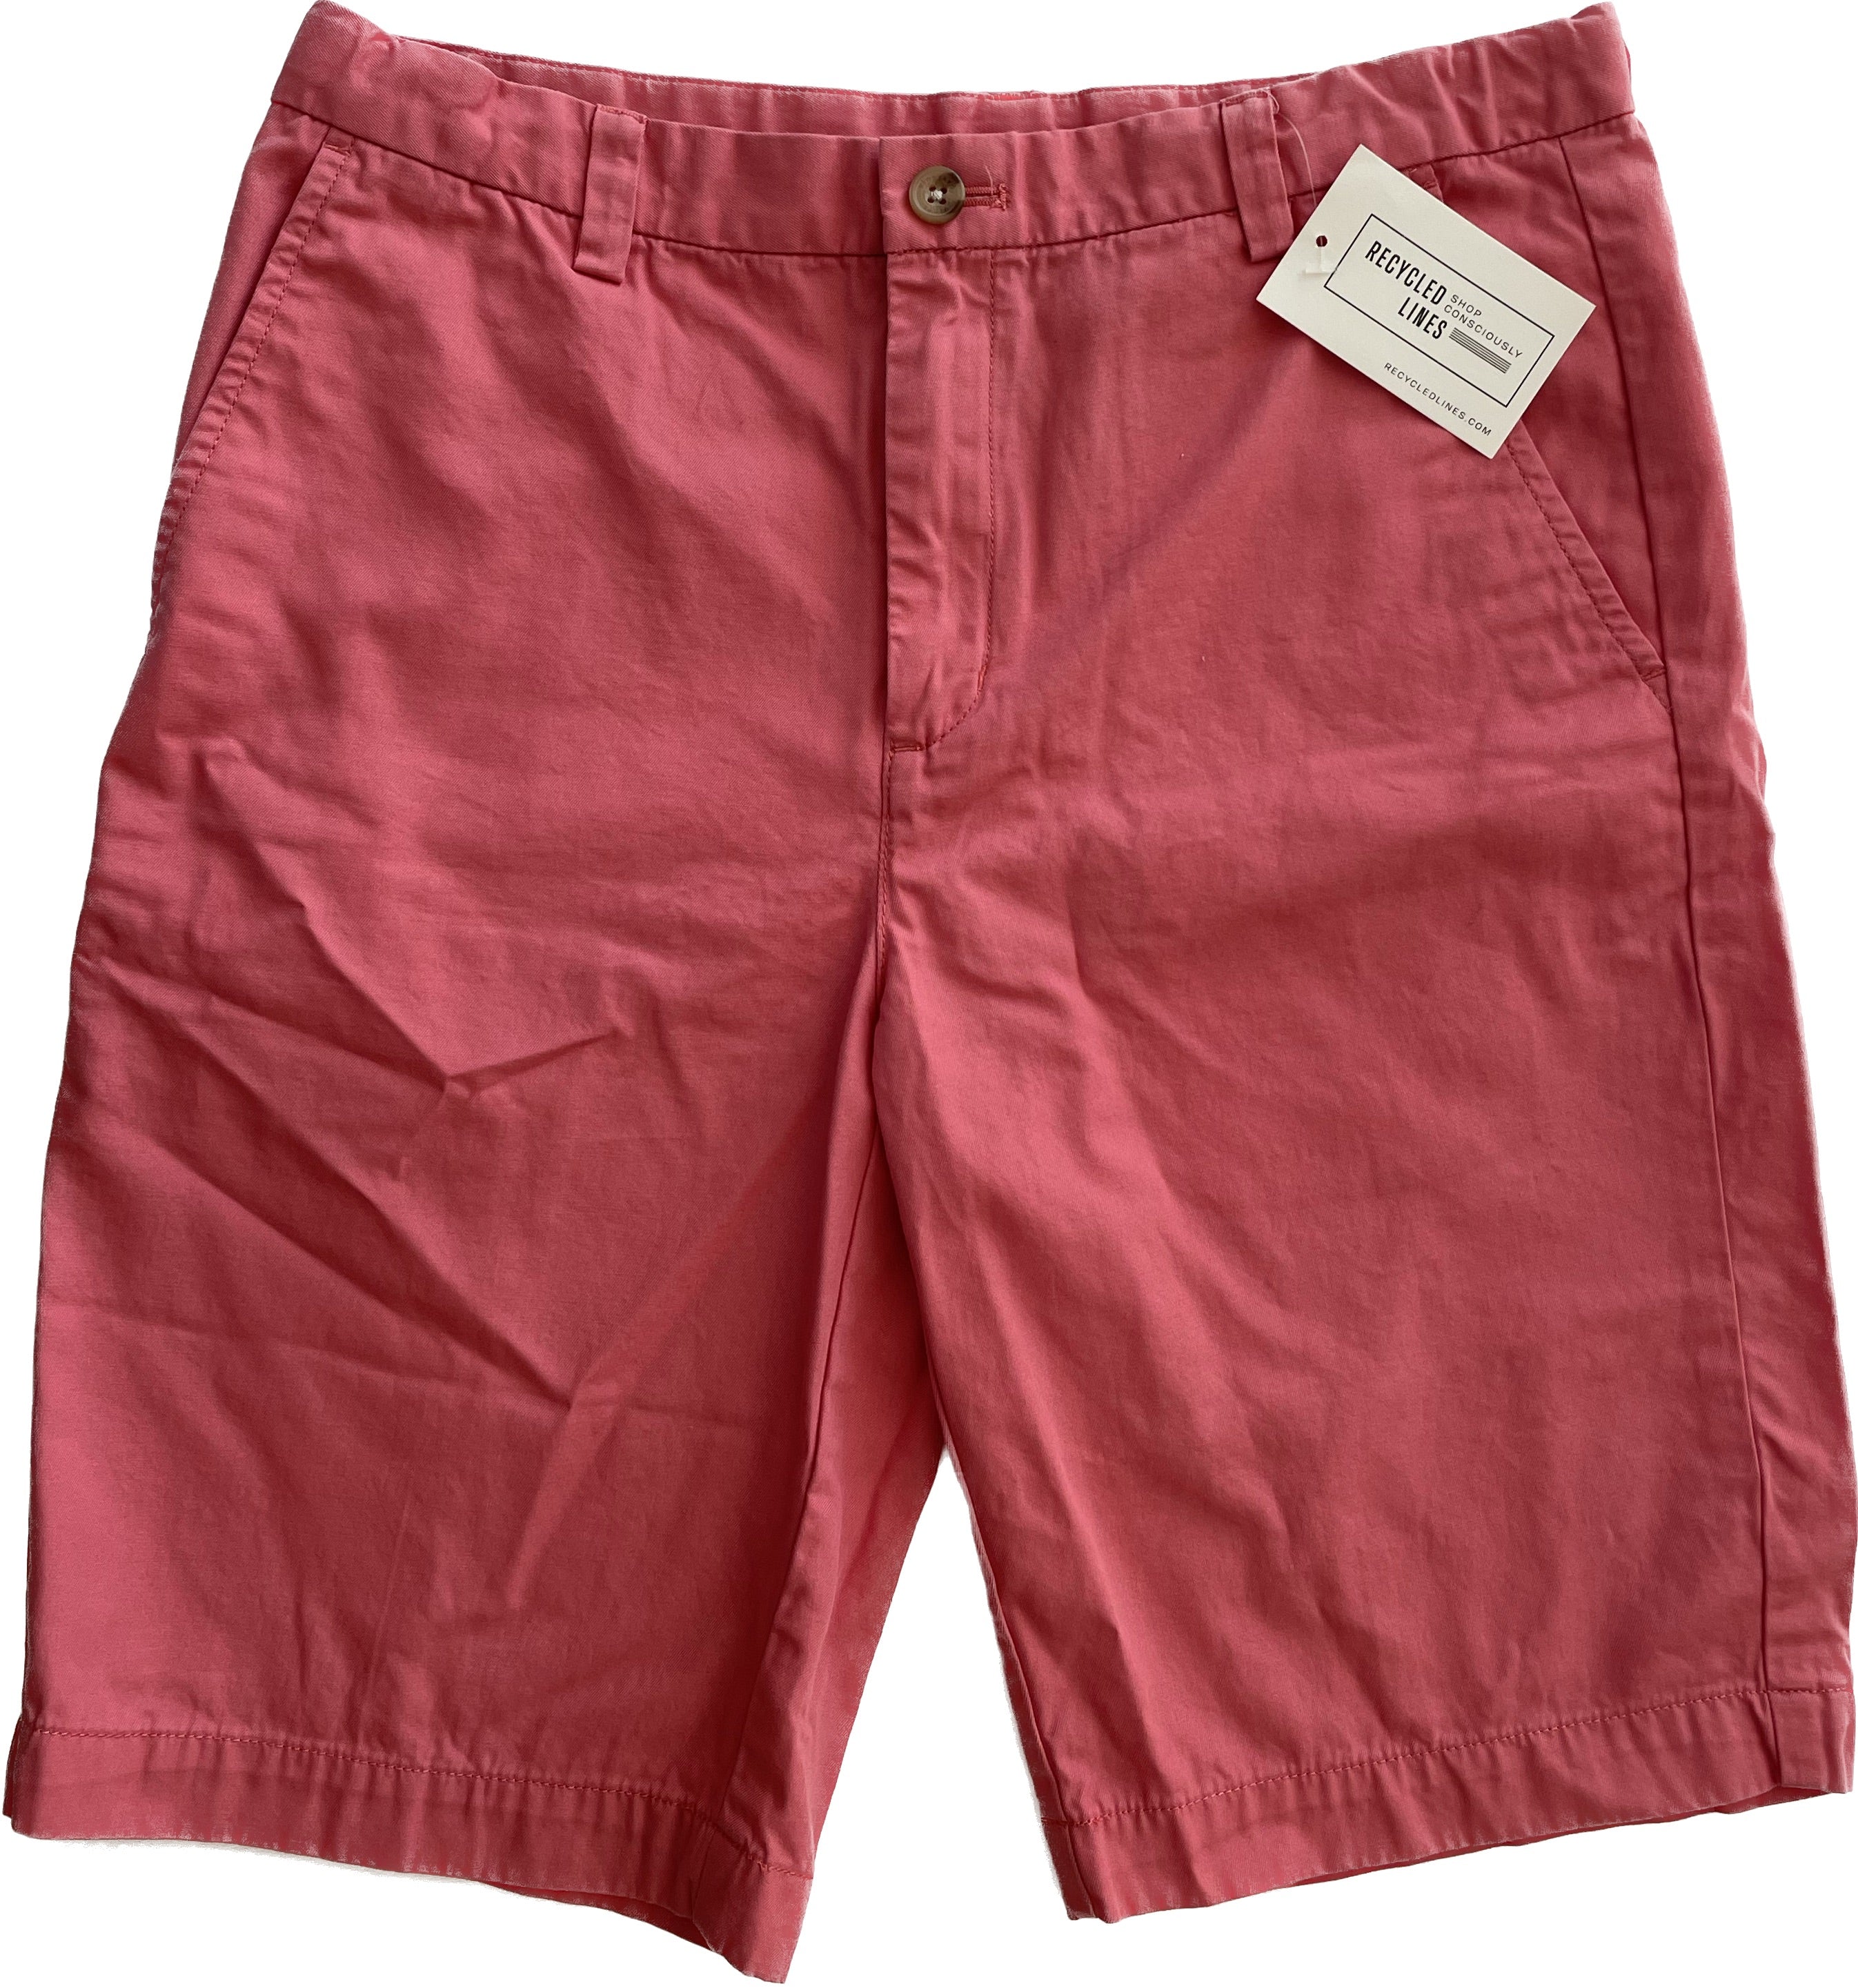 Vineyard Vines Shorts, Nantucket Red Boys Size 16